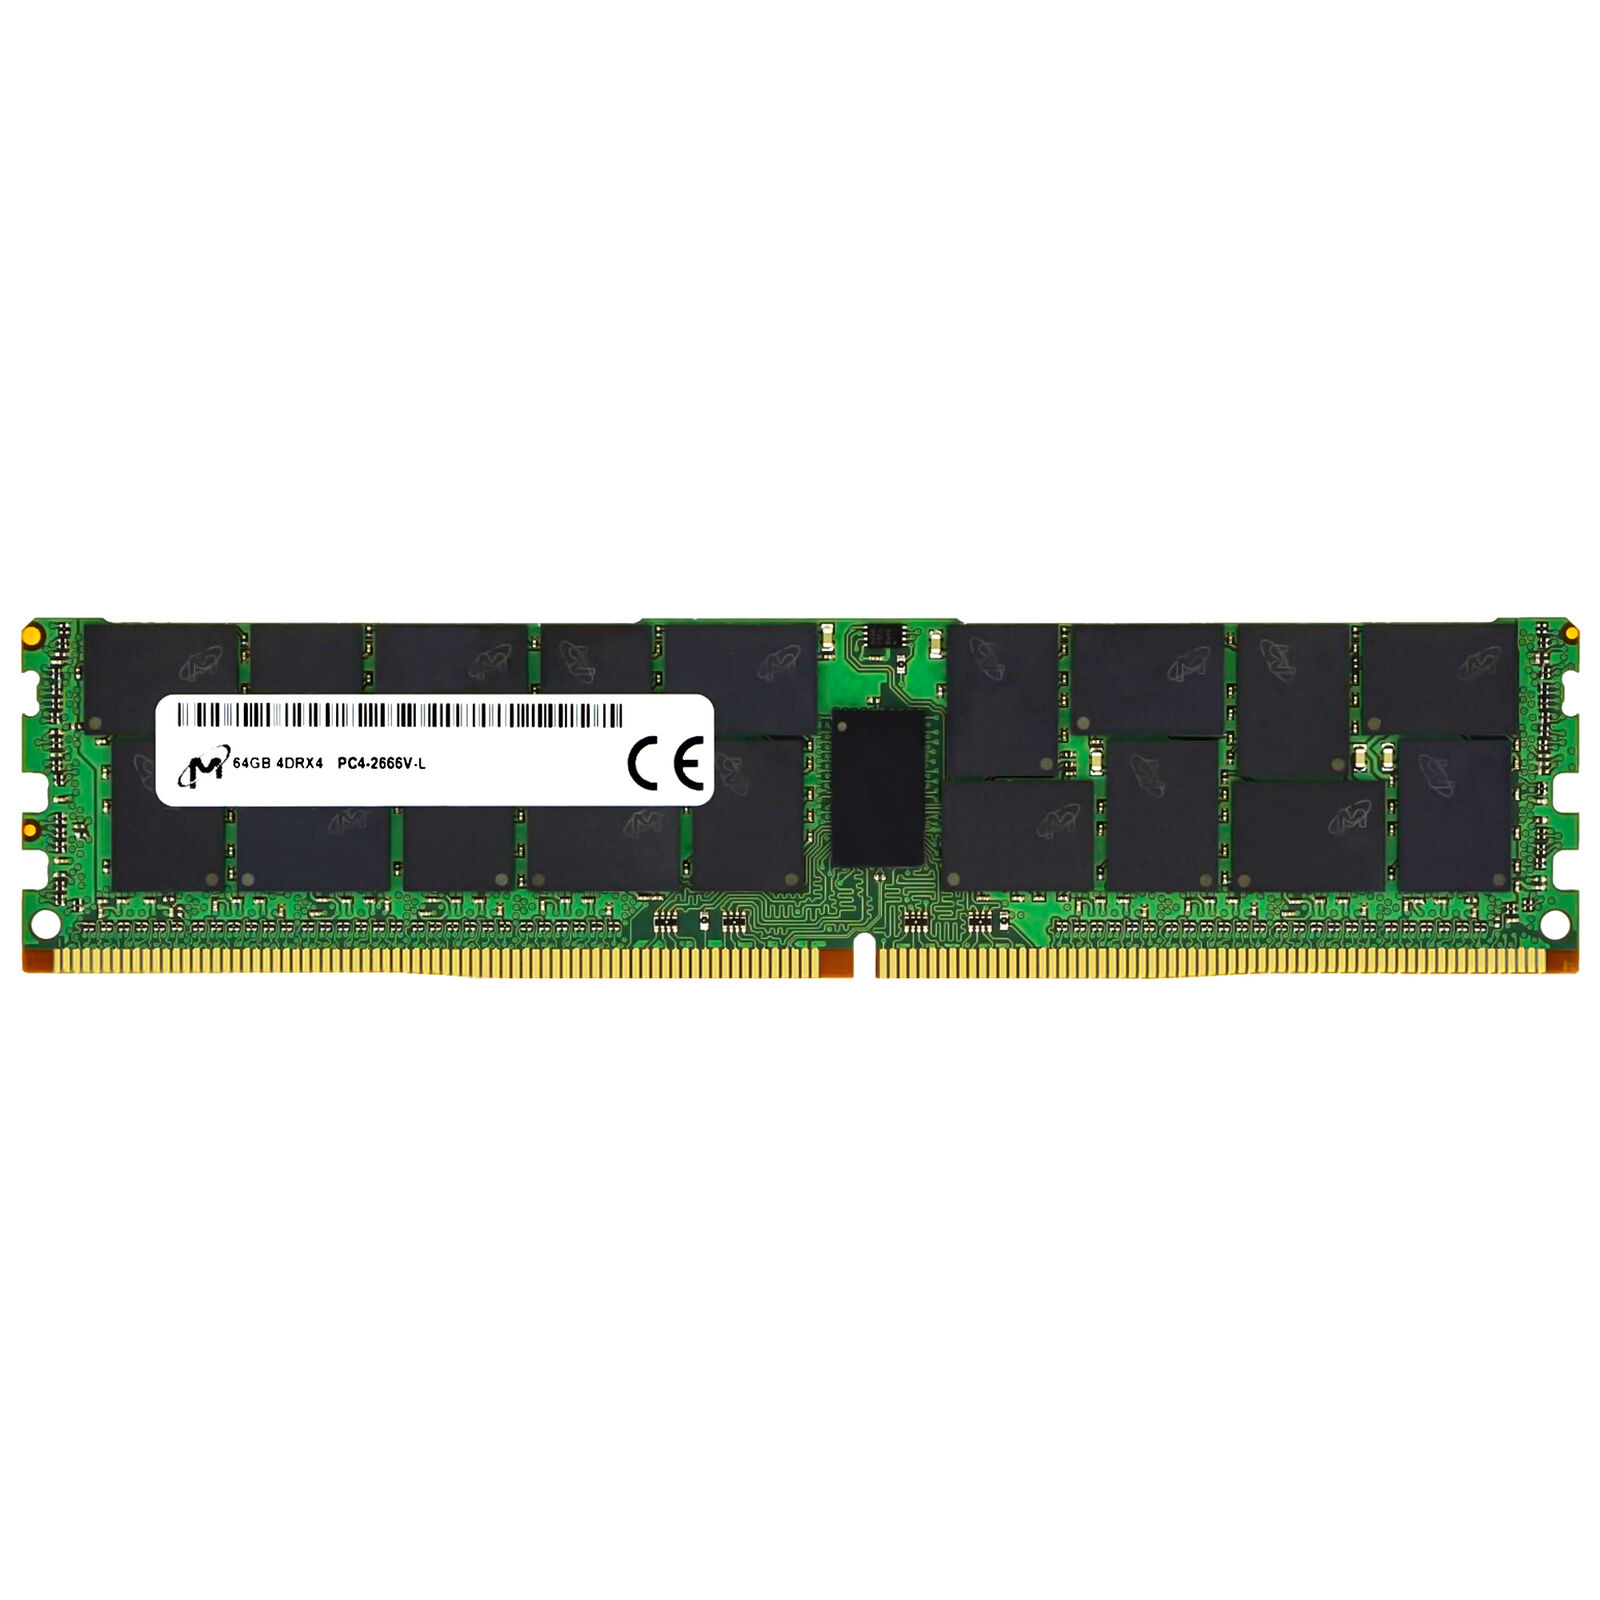 Micron 64GB 4DRx4 PC4-2666V LRDIMM DDR4-21300 ECC Load Reduced Server Memory RAM